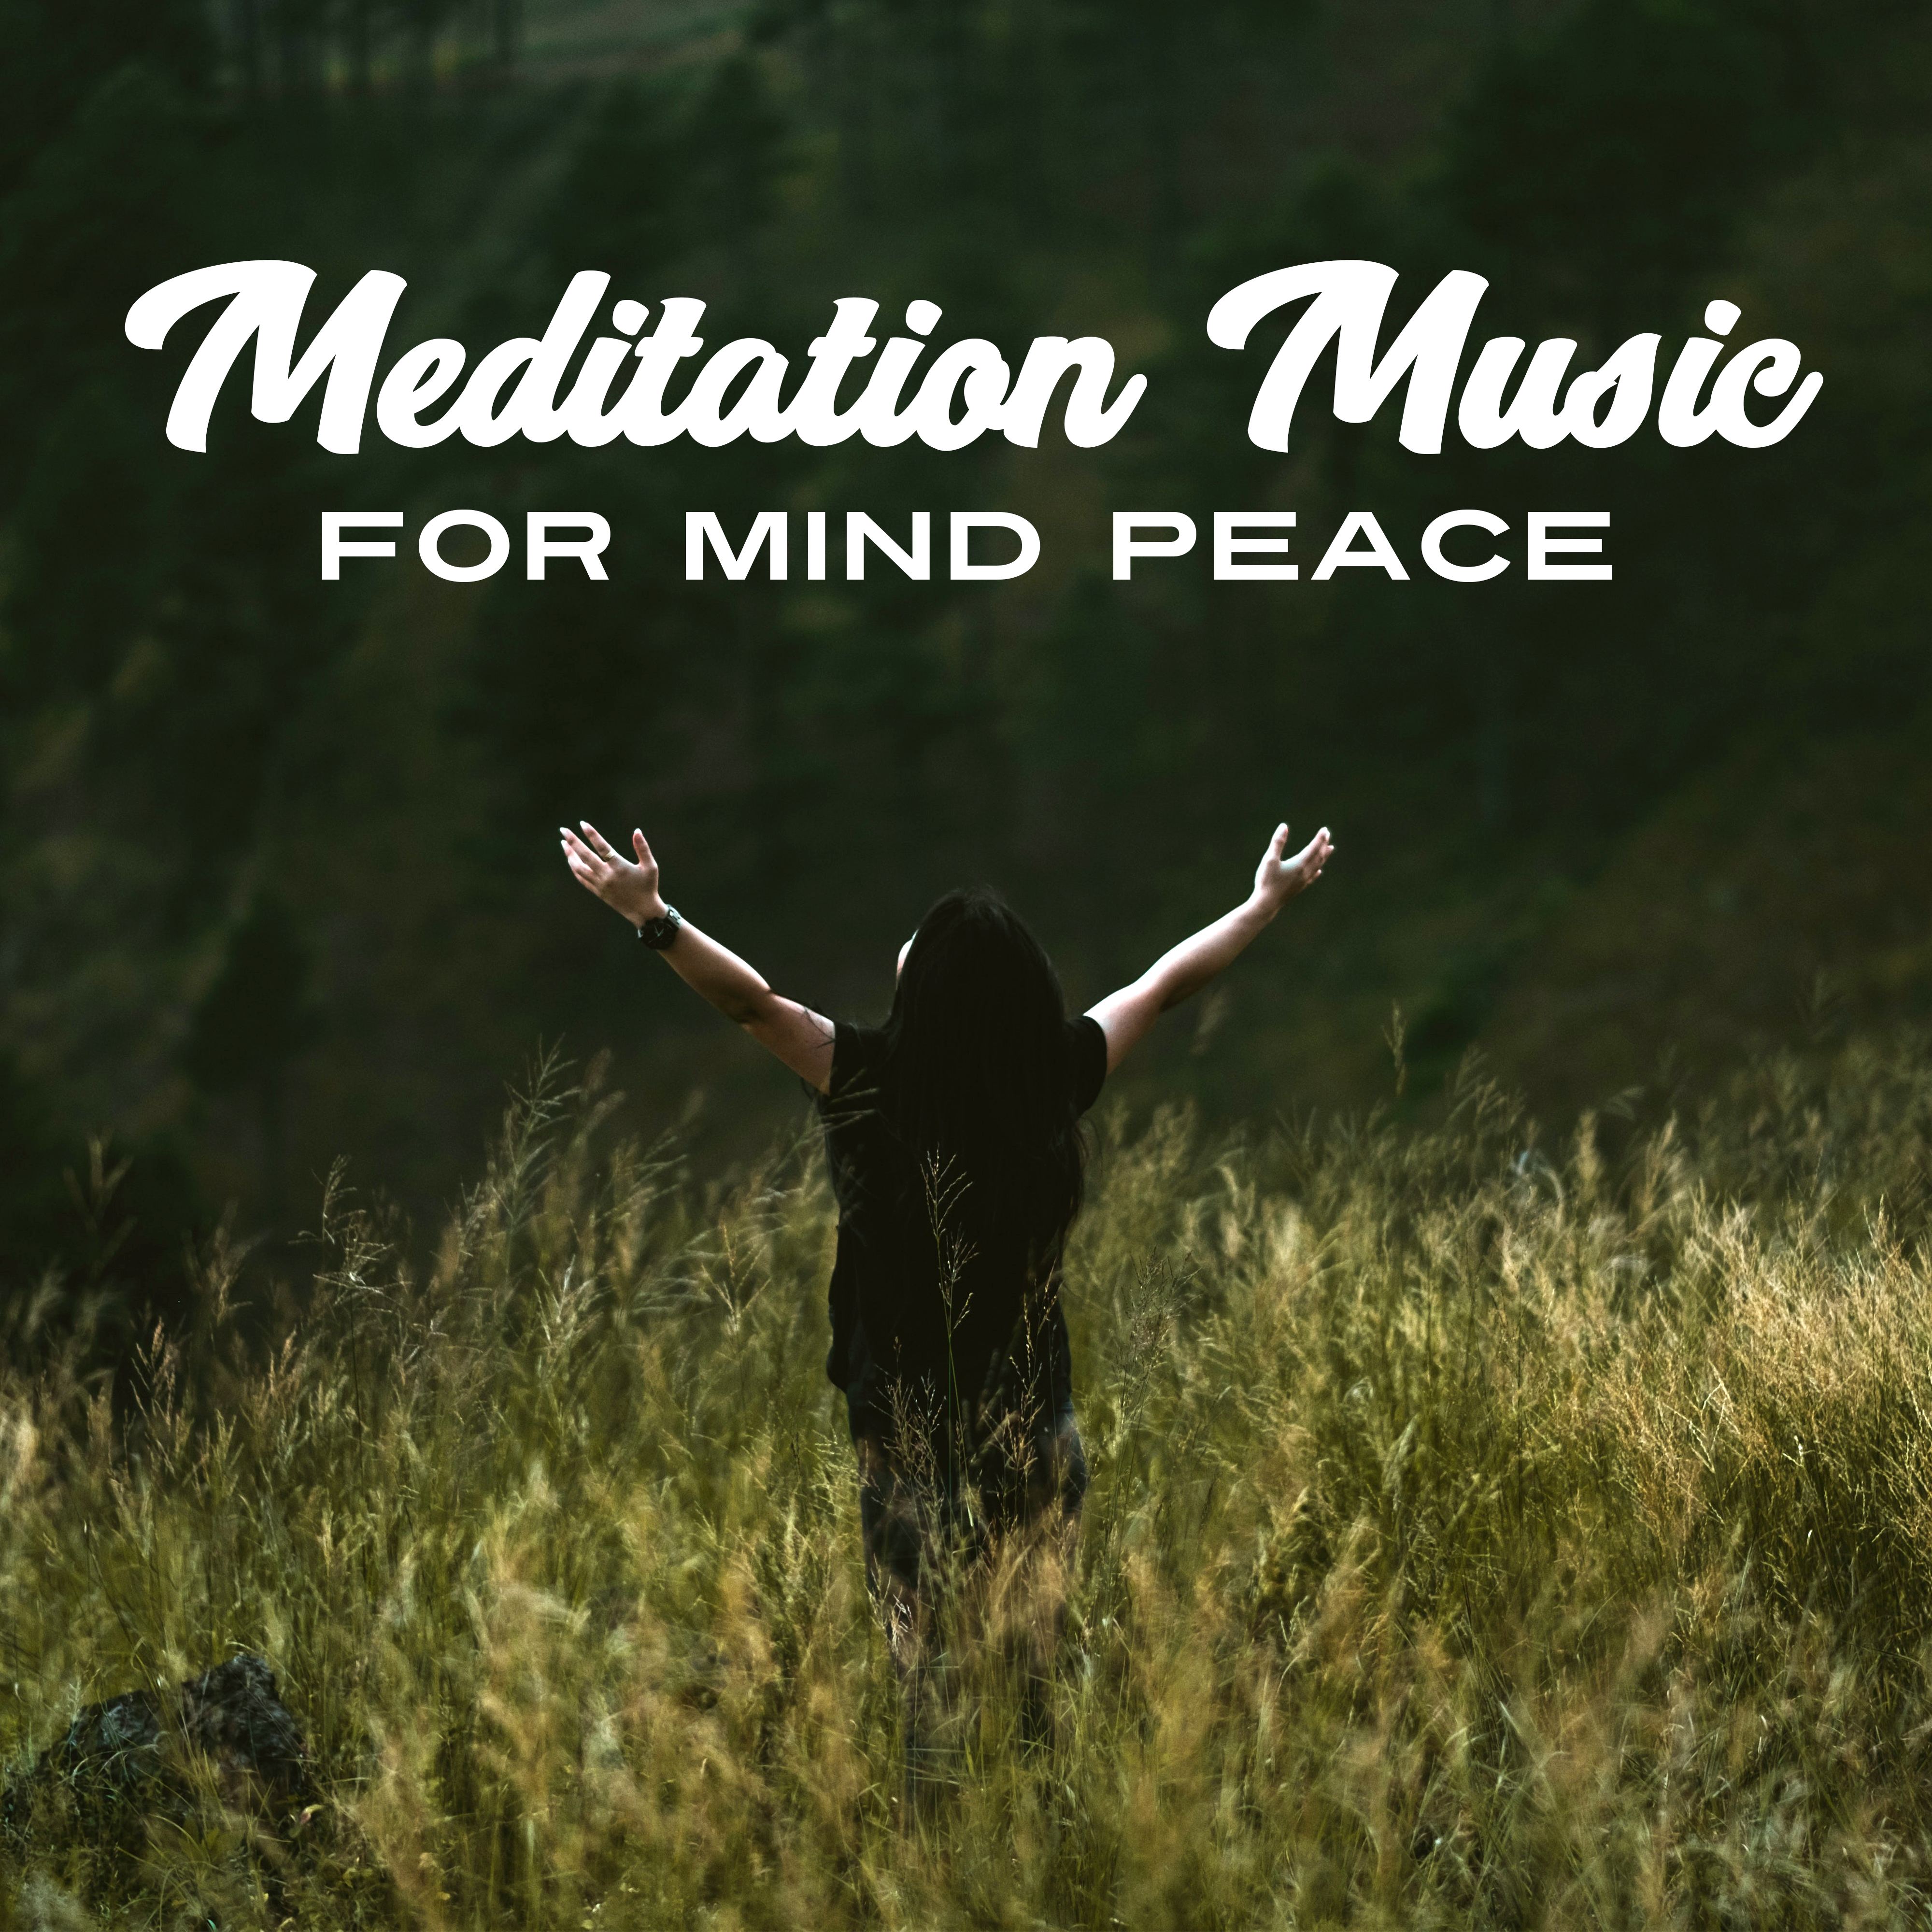 Meditation Music for Mind Peace – Calm Background Sounds to Meditate, Spirit Journey, Buddha Lounge